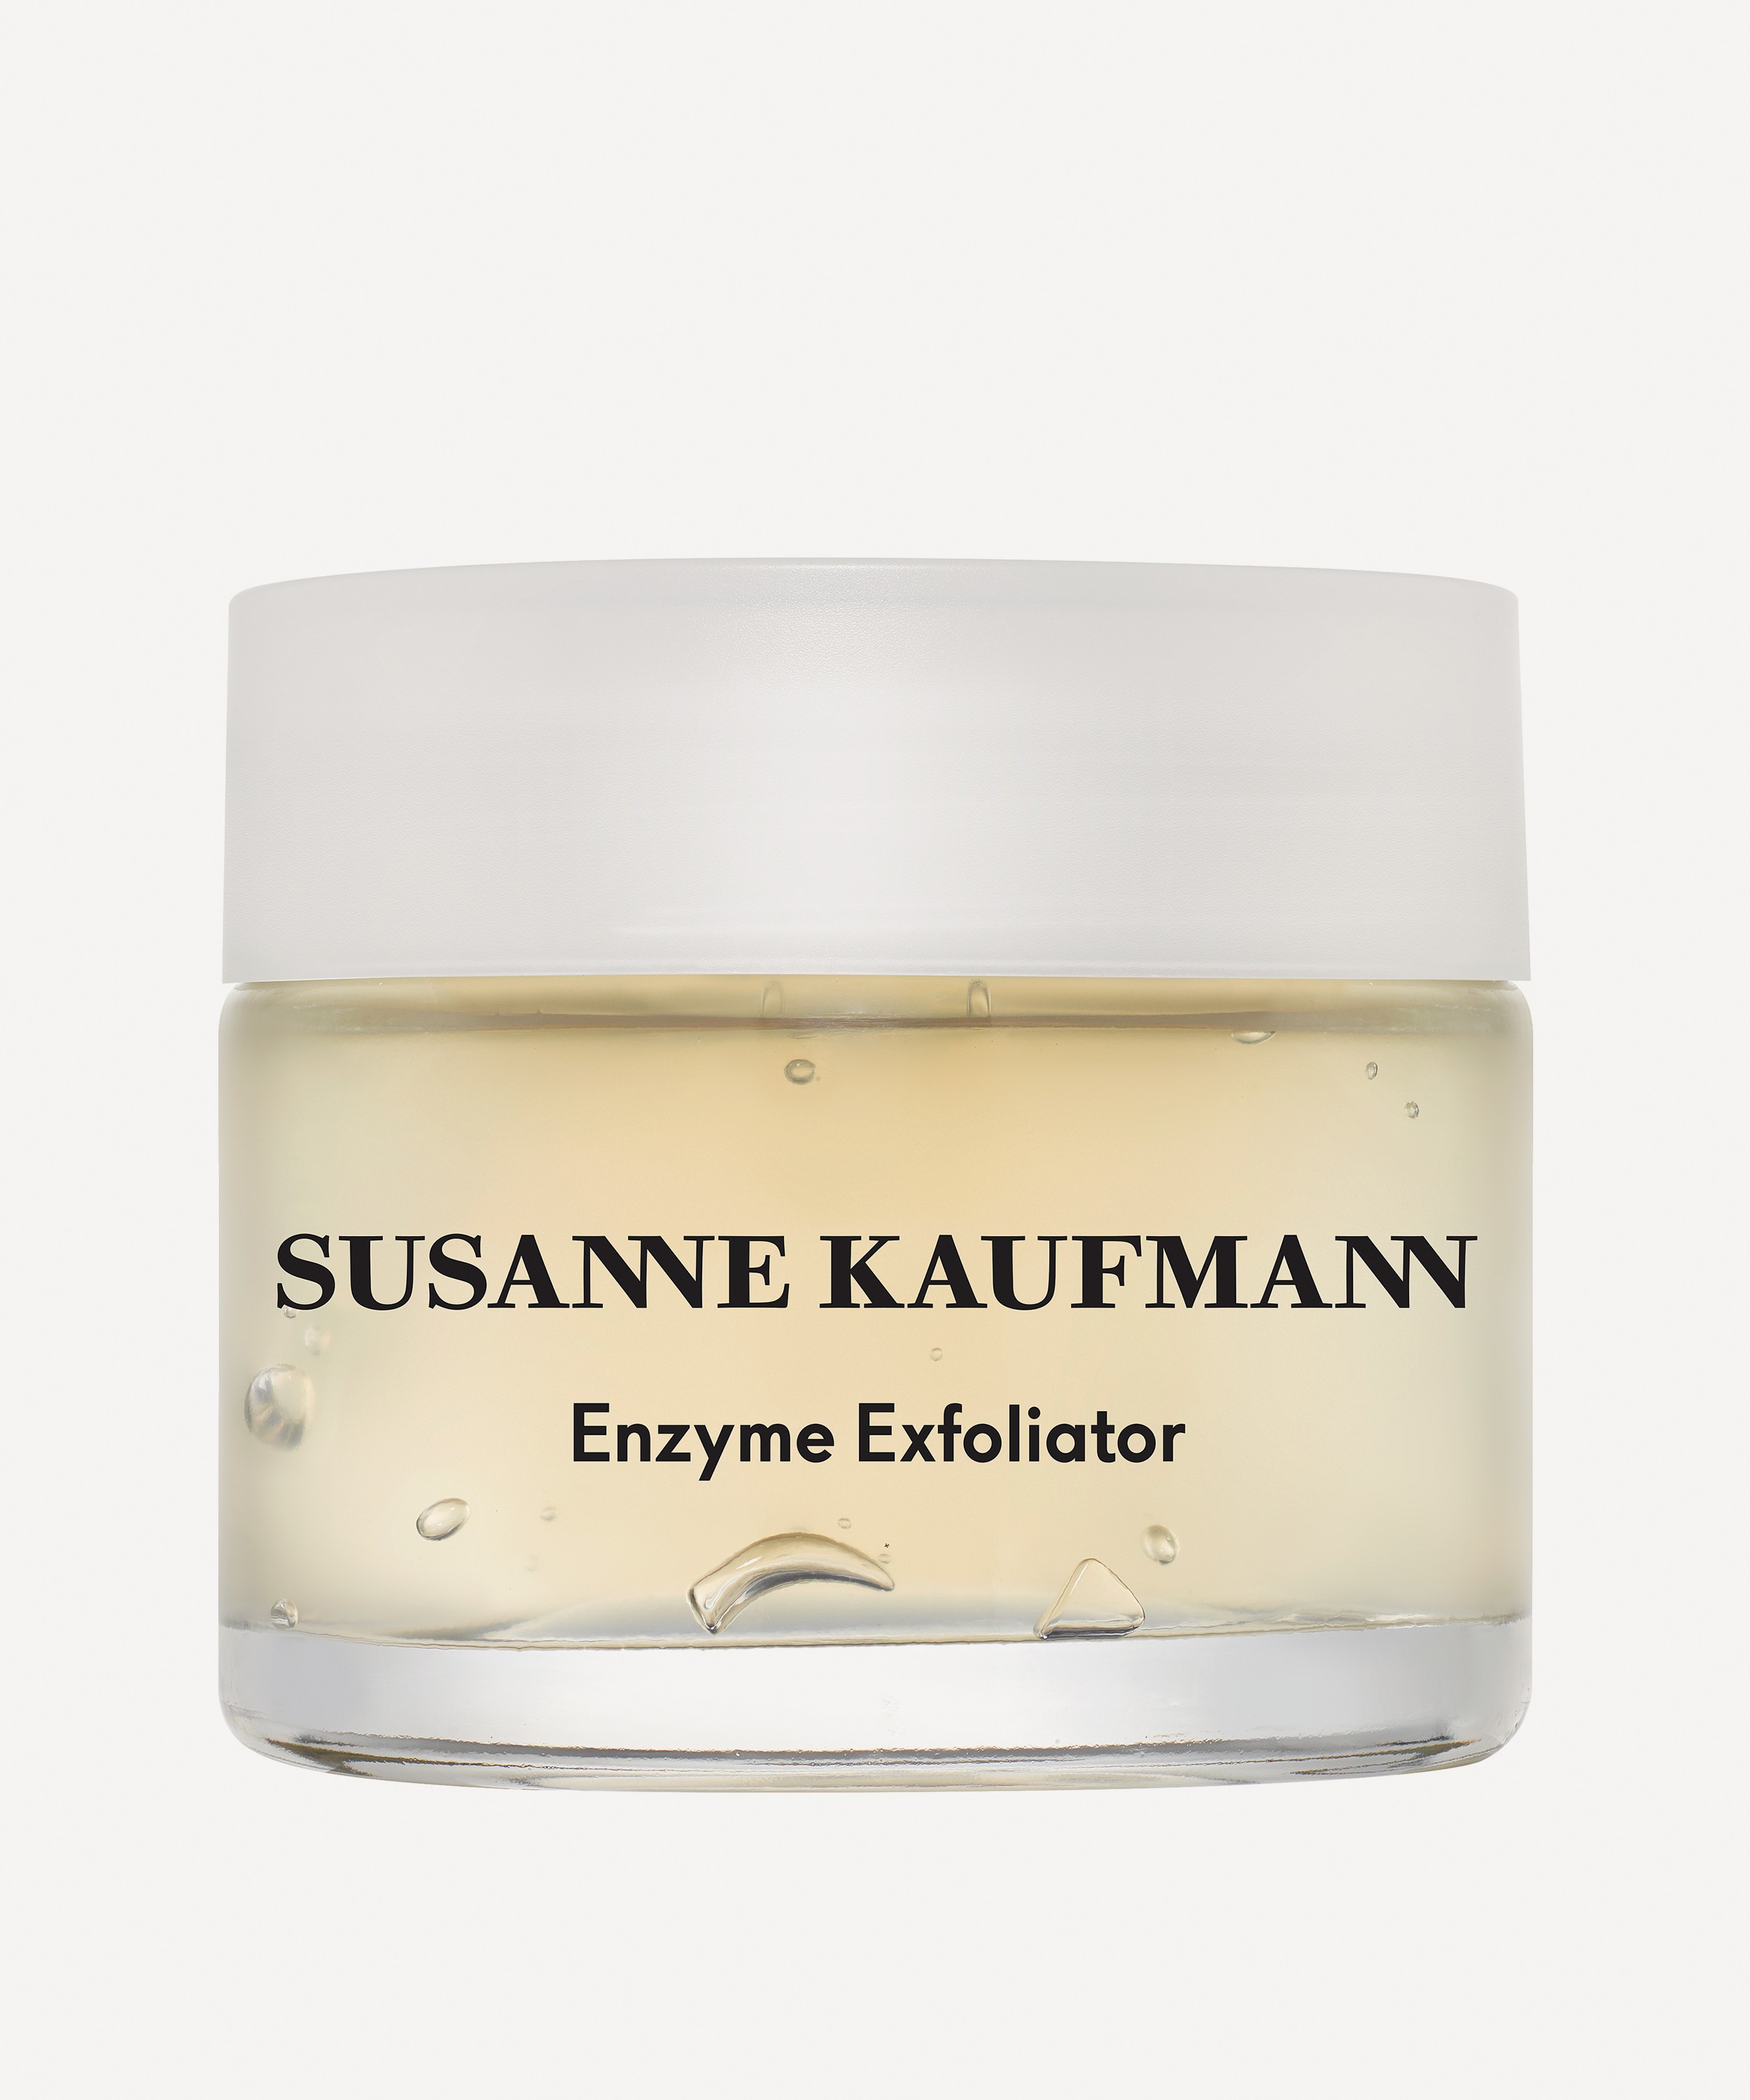 Susanne Kaufmann - Enzyme Exfoliator 50ml image number 0